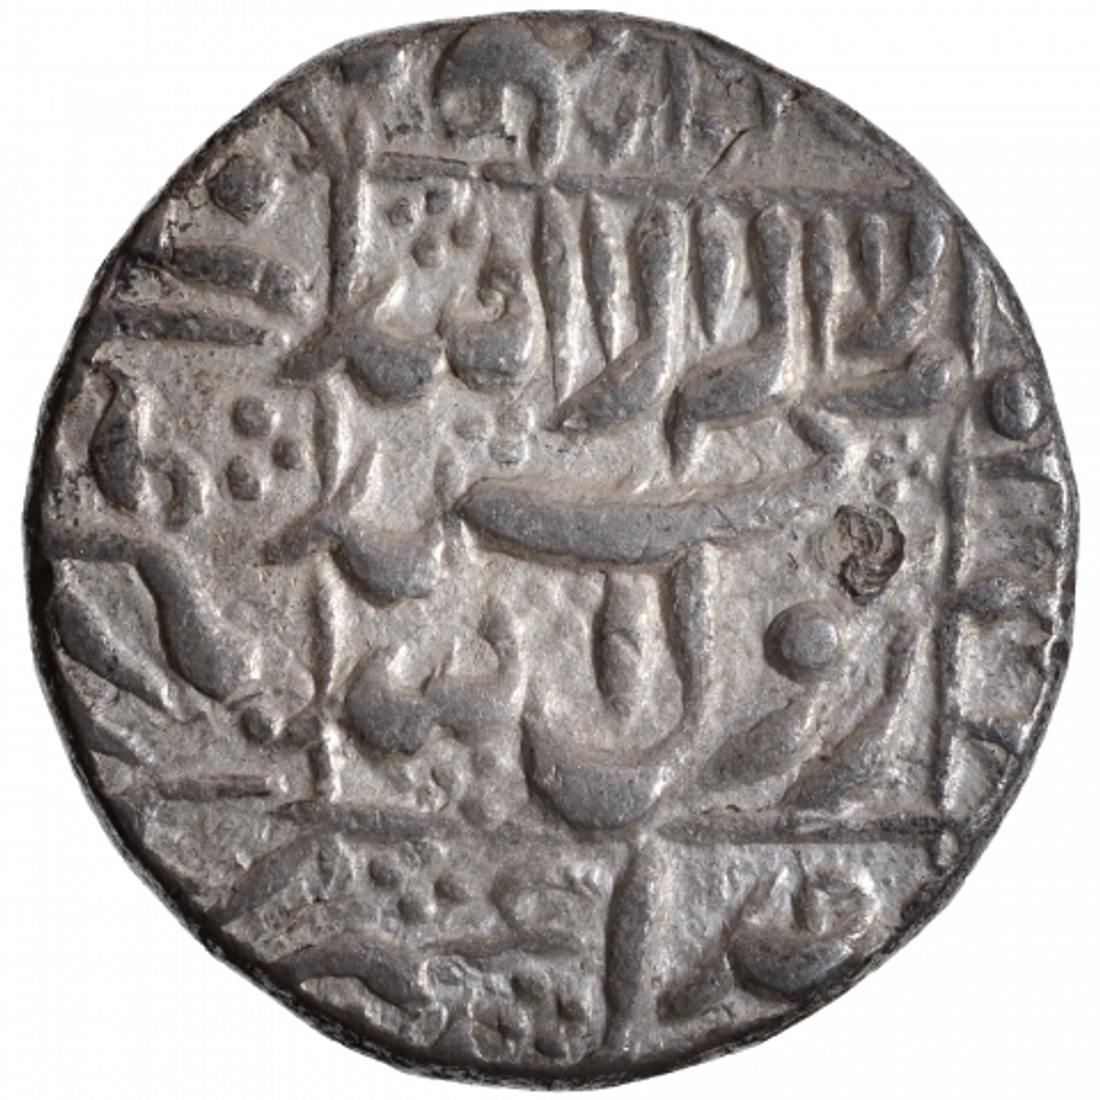 Silver One Rupee Coin of Murad Bakhsh of Ahmadabad Mint.